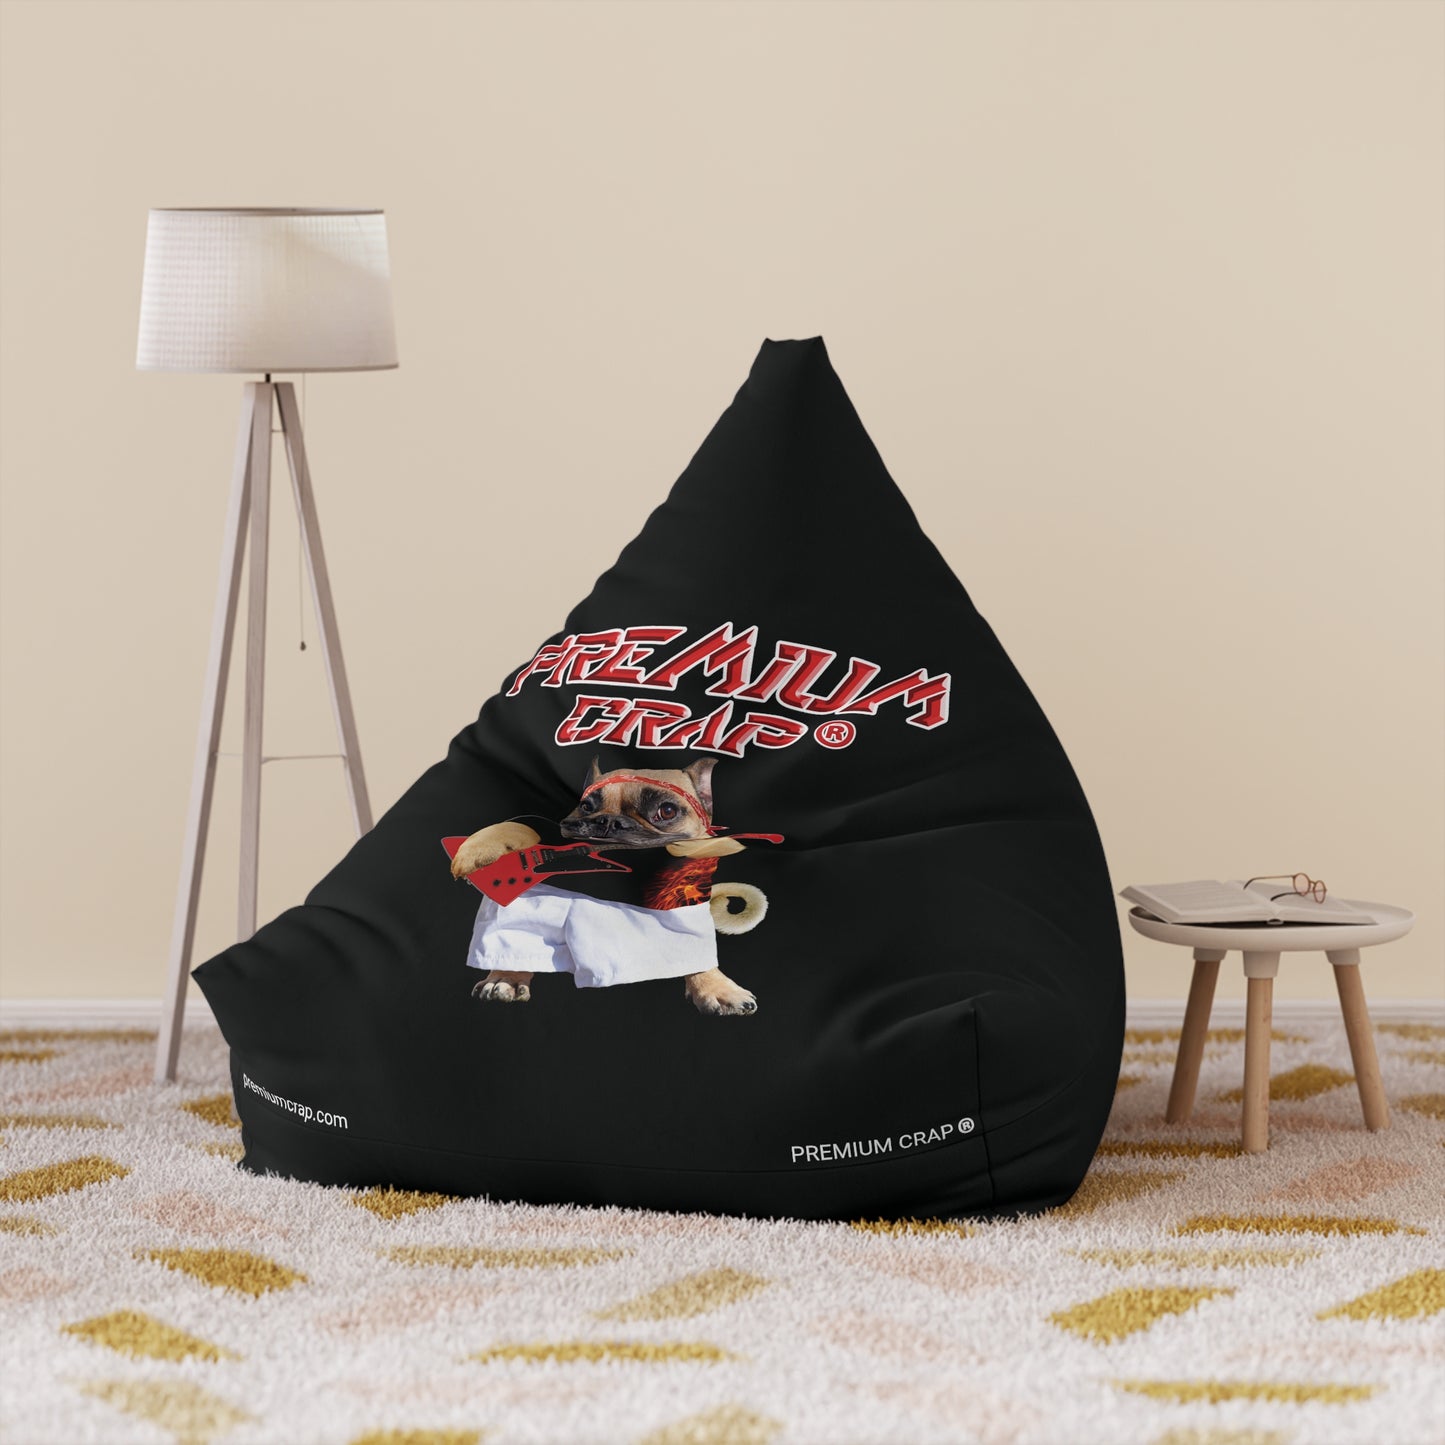 Premium Crap Bean Bag Chair Cover